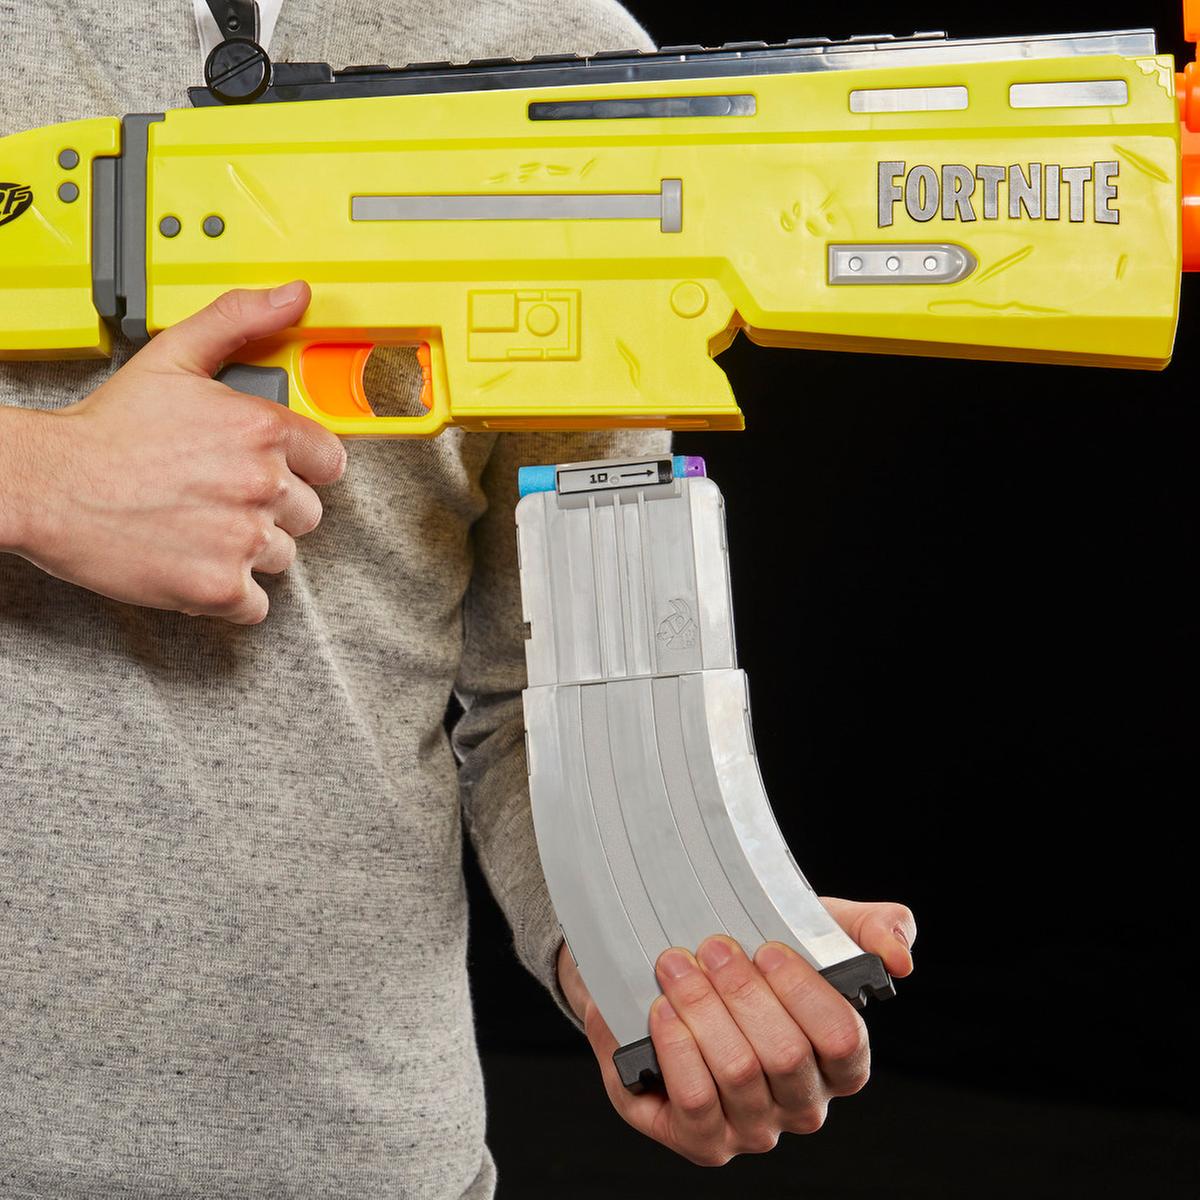 Nerf - Fortnite AR-L | Toys R' Us | Toys"R"Us España